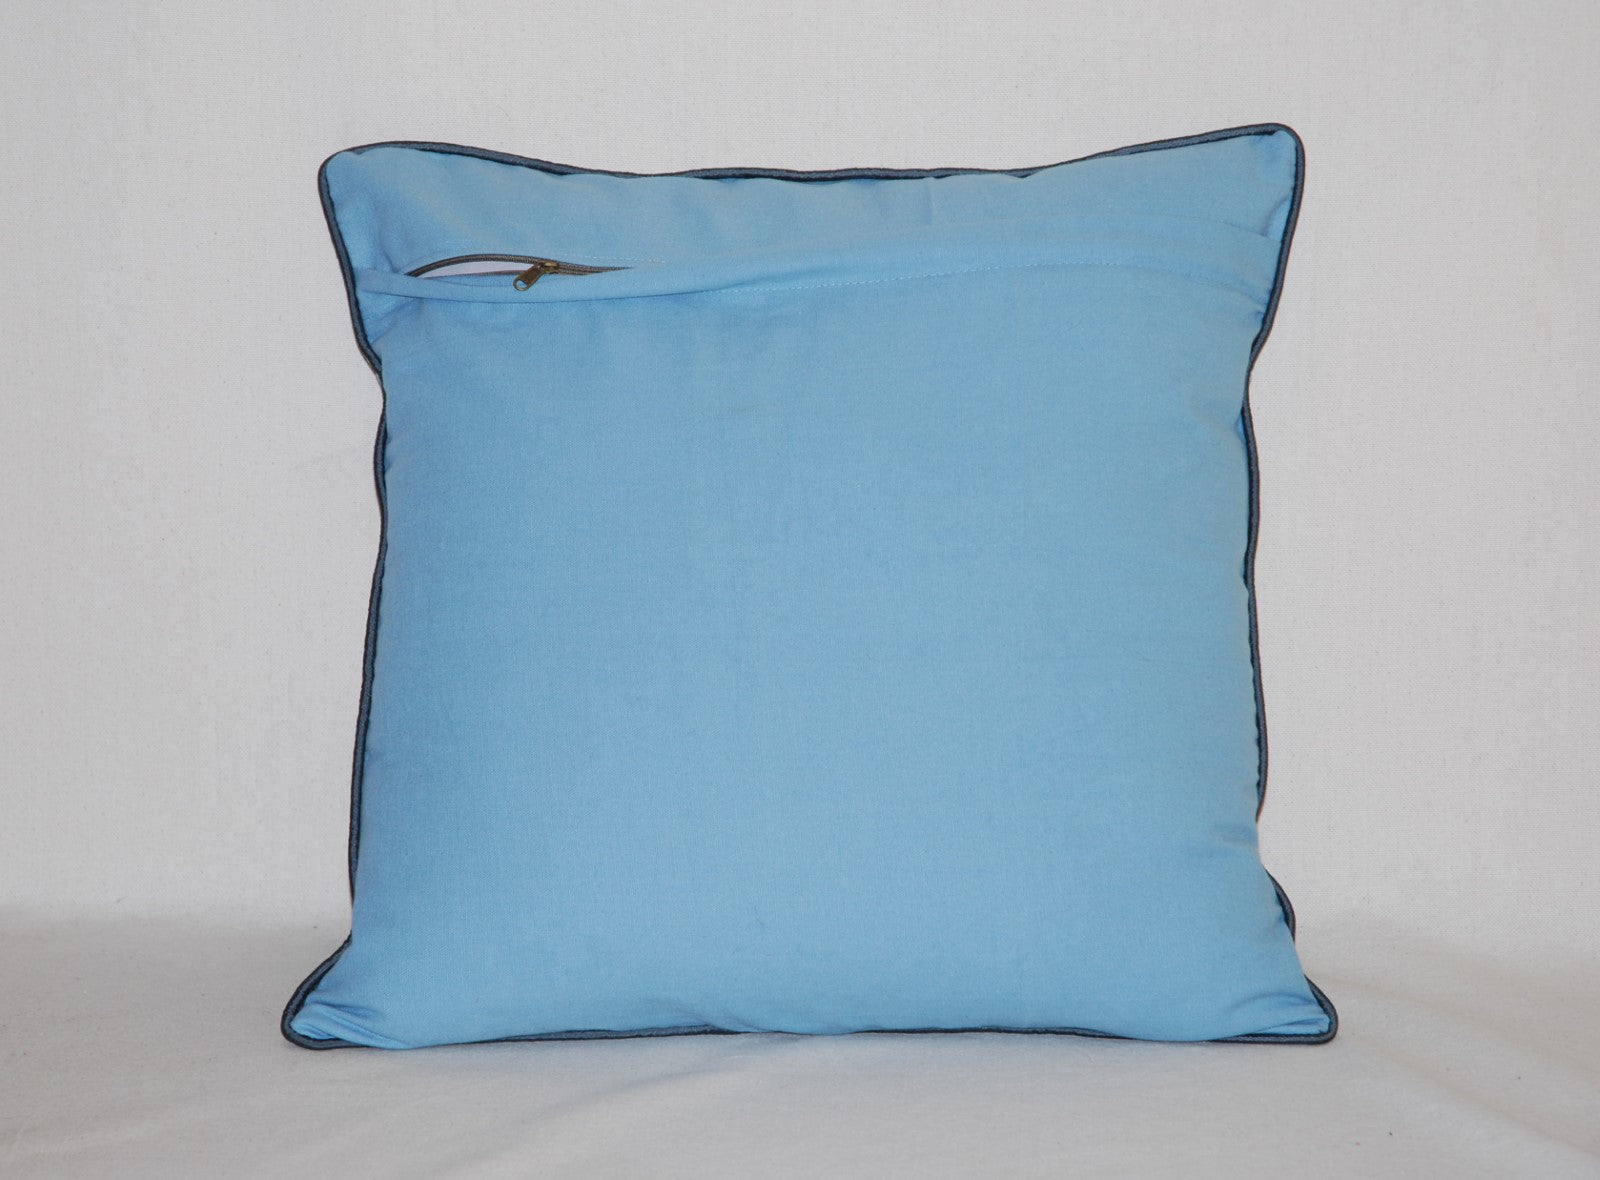 Vintage Tone-Tone Crewel Cotton Throw Pillow Cushion Cover Sky Blue #CW260